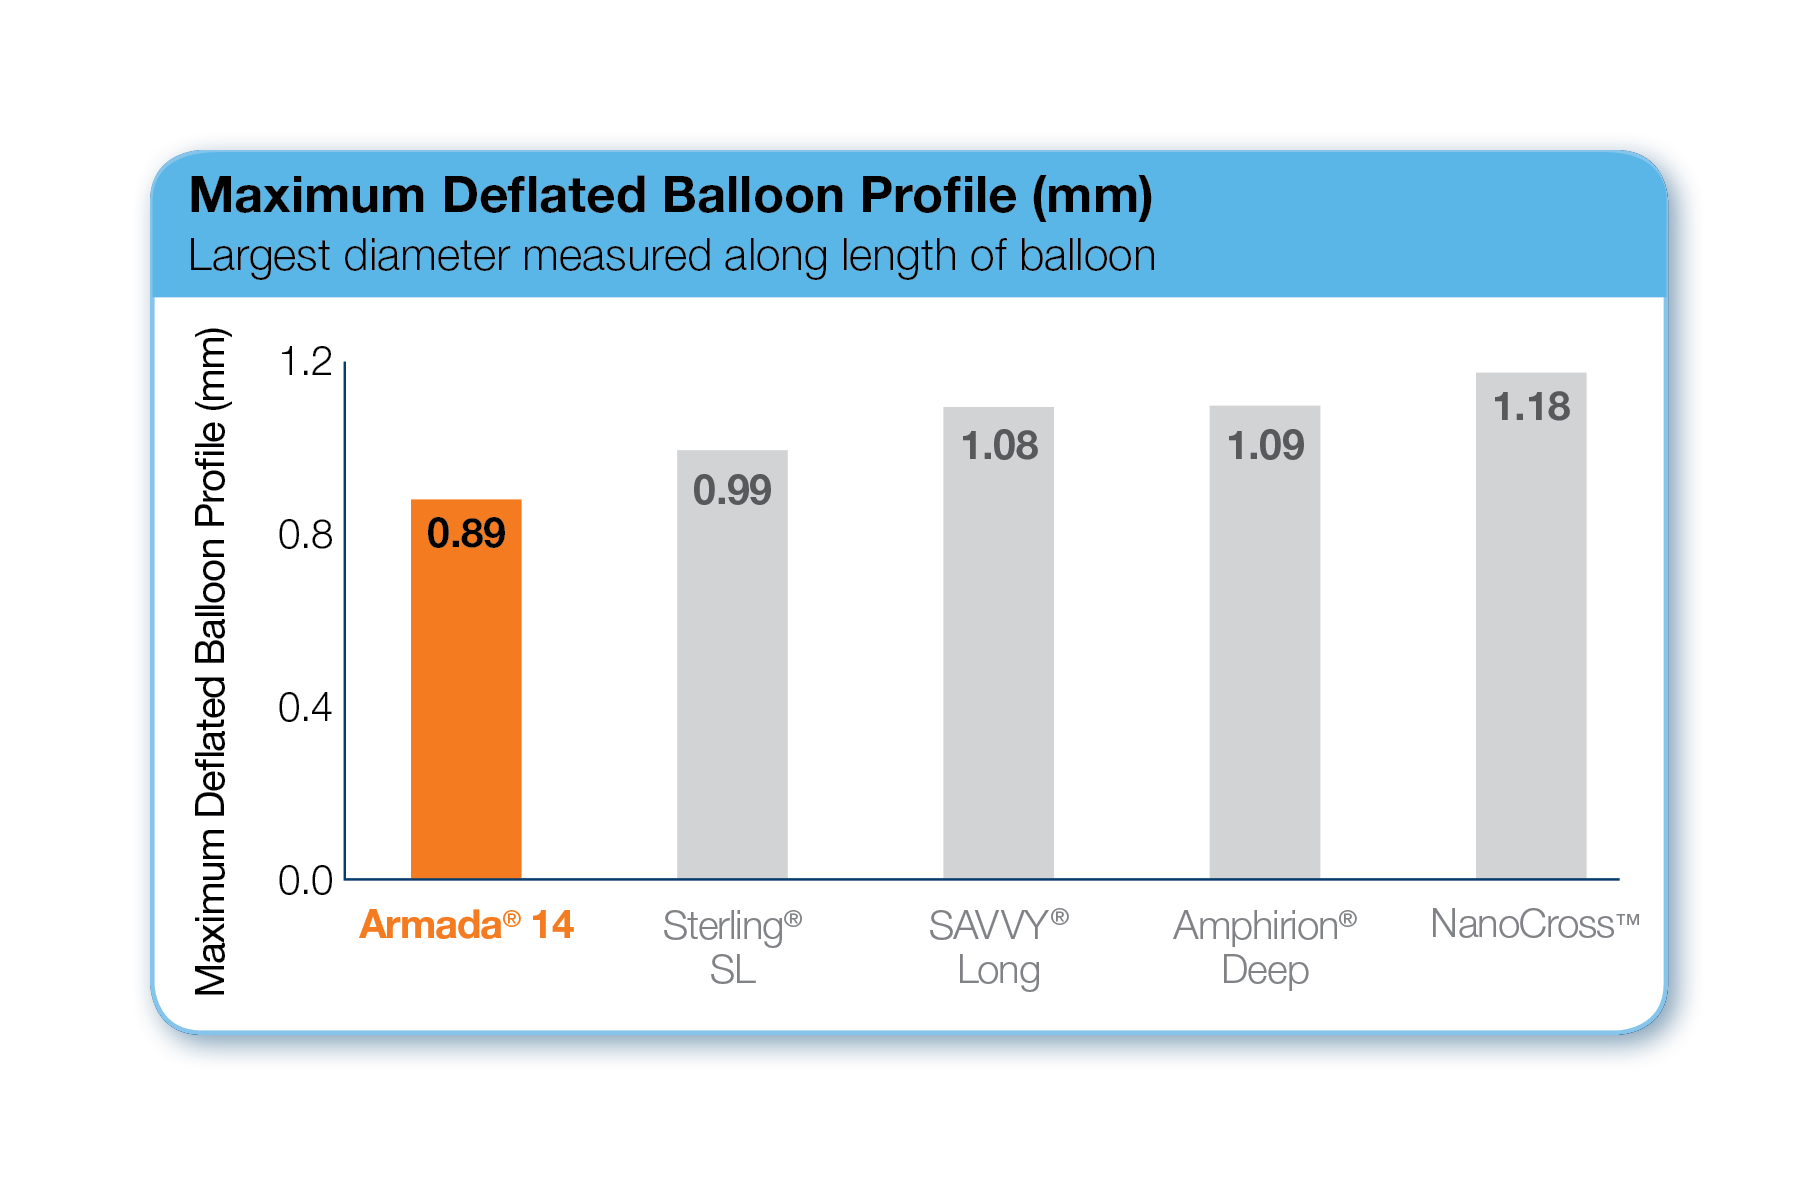 Armada 14 Maximum Deflated Balloon Profile